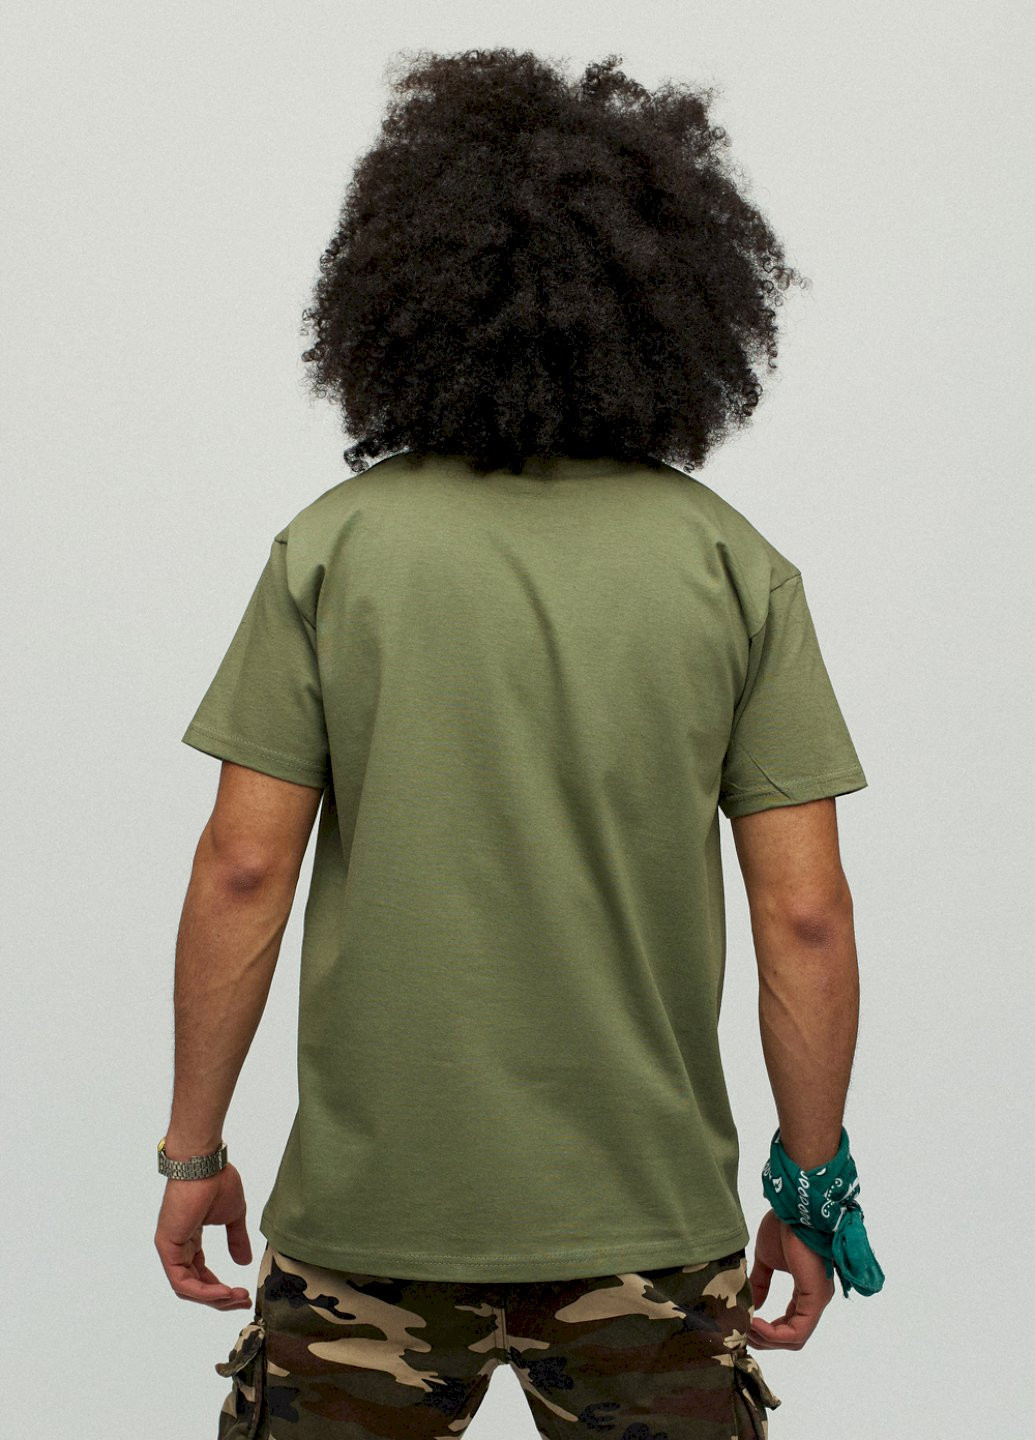 Хаки (оливковая) футболка мужская хаки зеленый "швидко - повільно без перерв" YAPPI